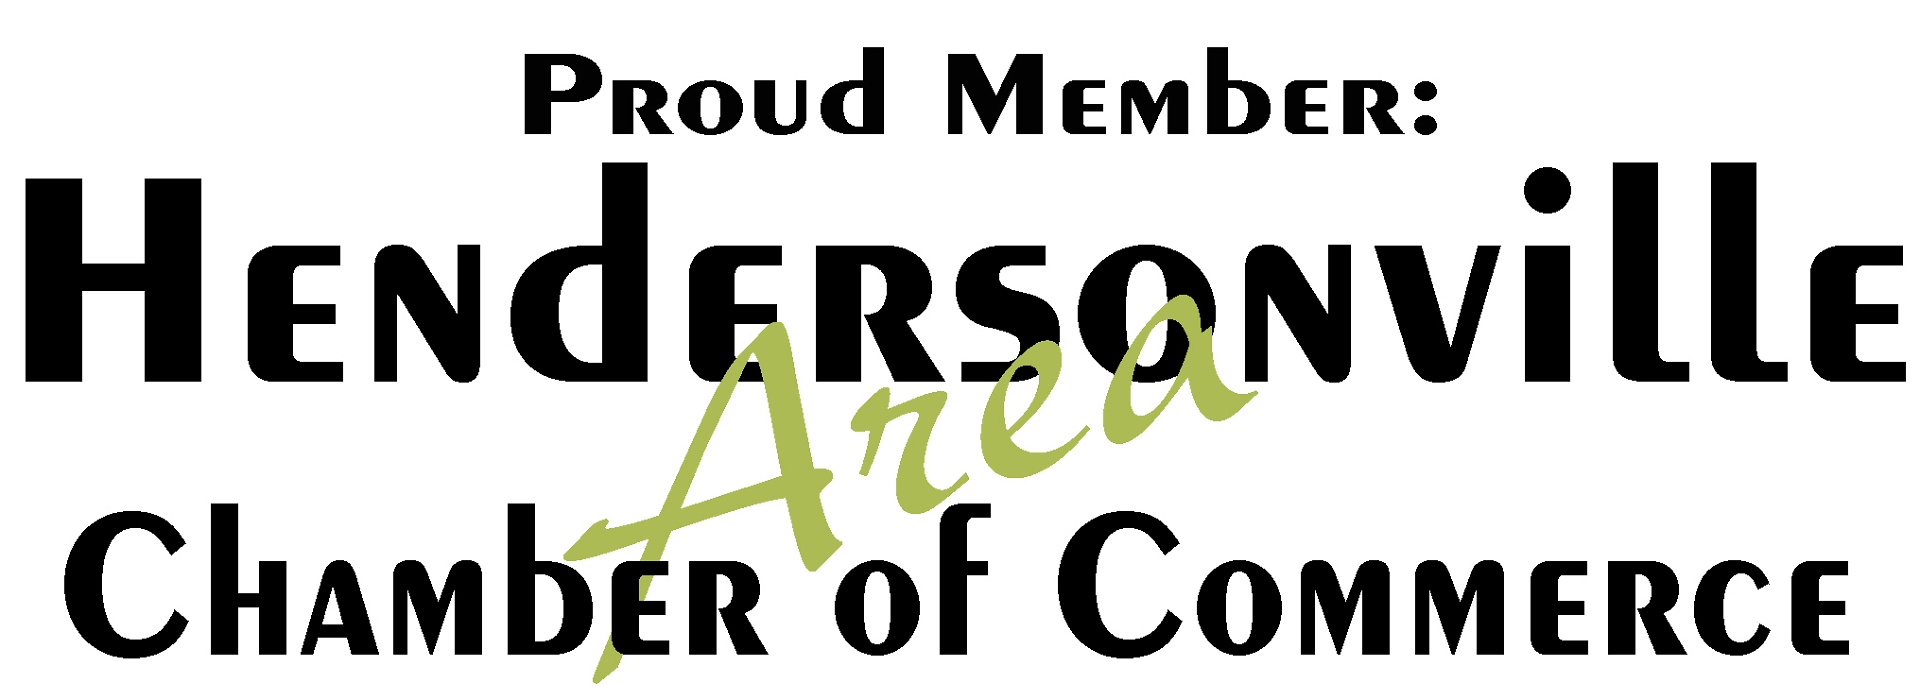 Proud Member Logo copy